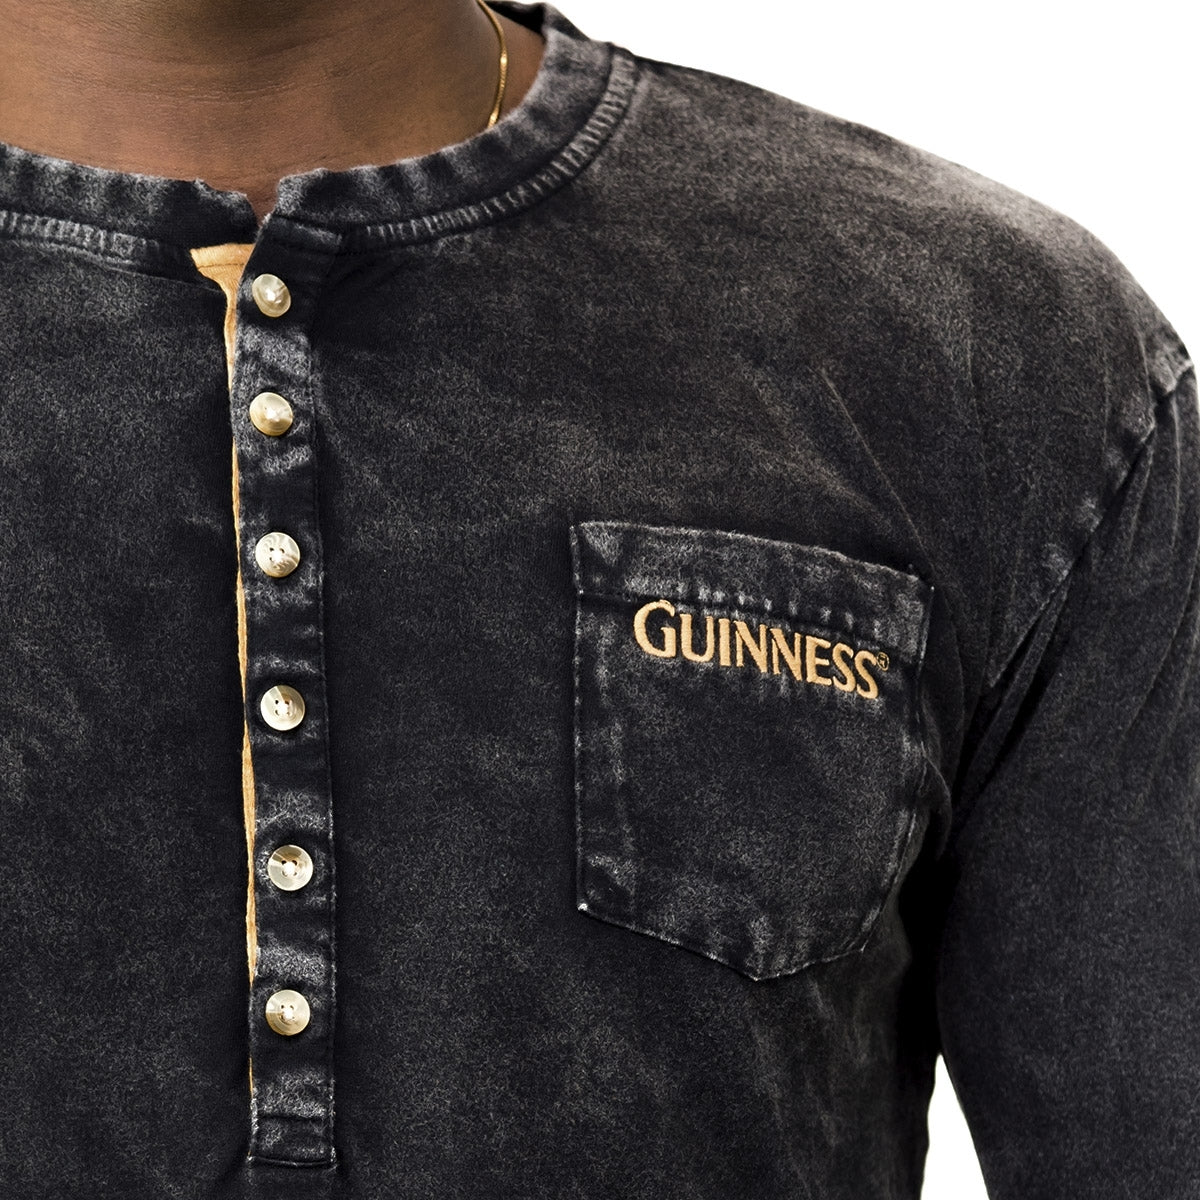 Black Classic Henley shirt with Guinness UK branding.